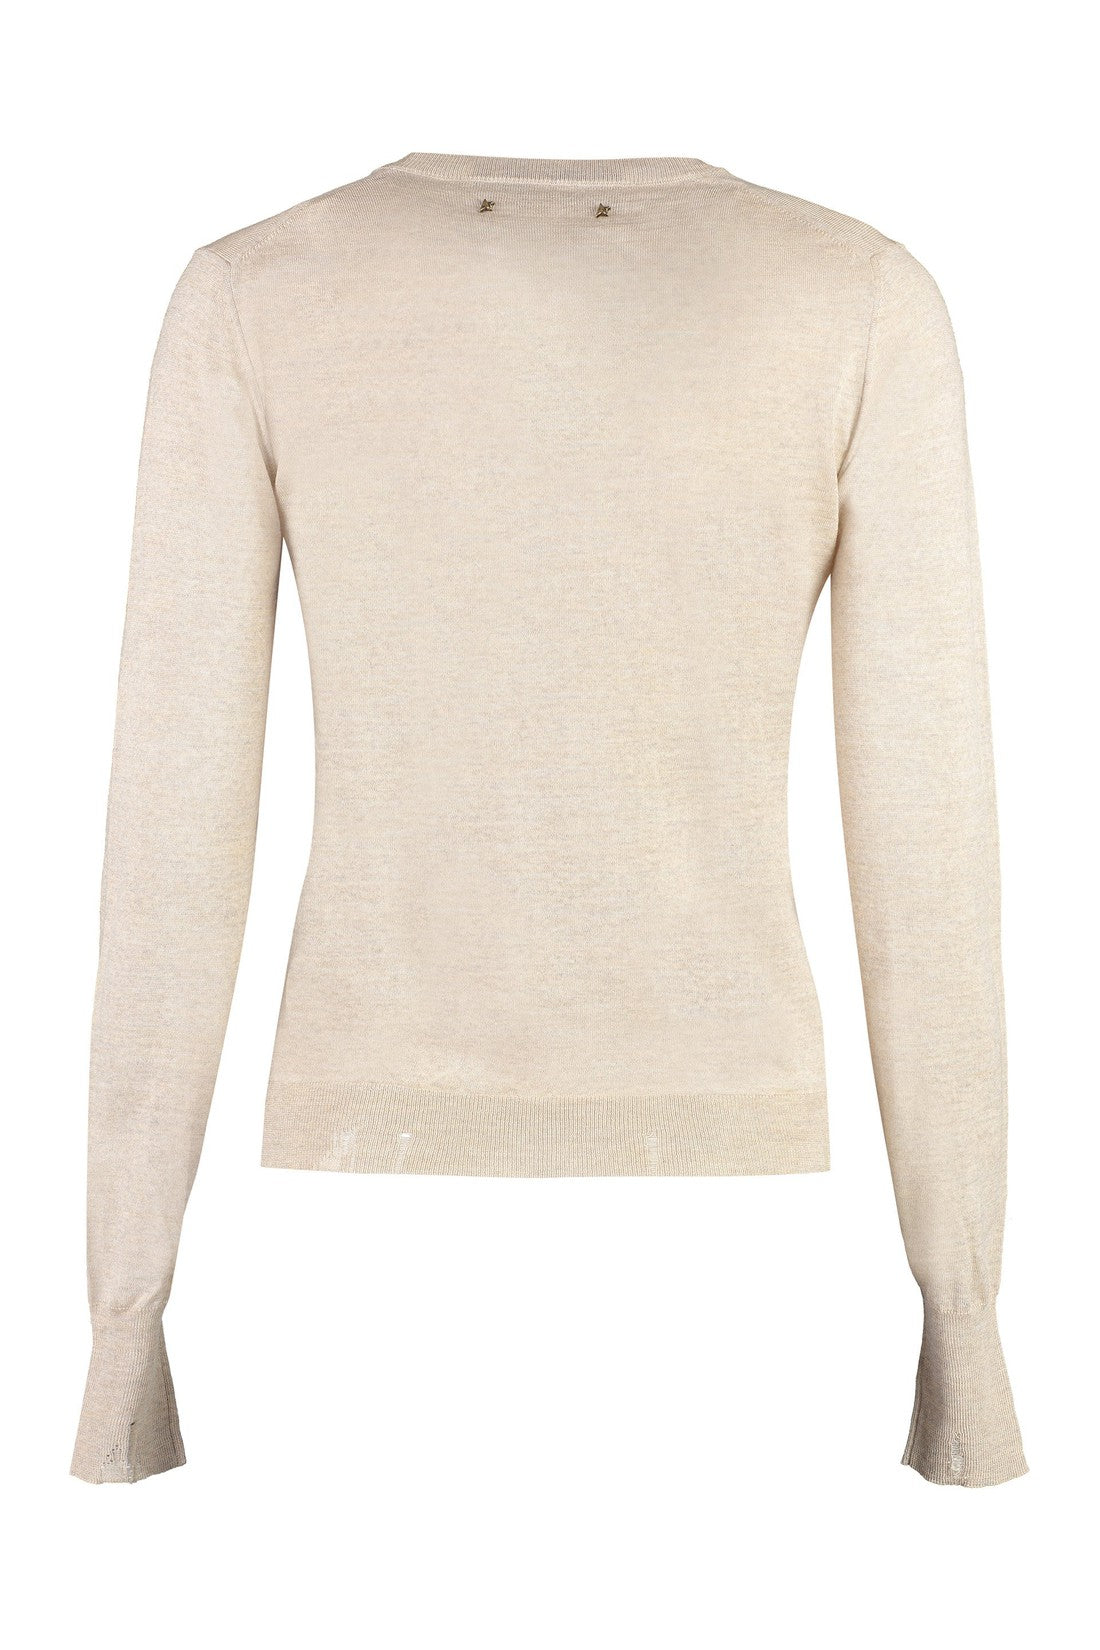 Golden Goose-OUTLET-SALE-Crew-neck wool sweater-ARCHIVIST